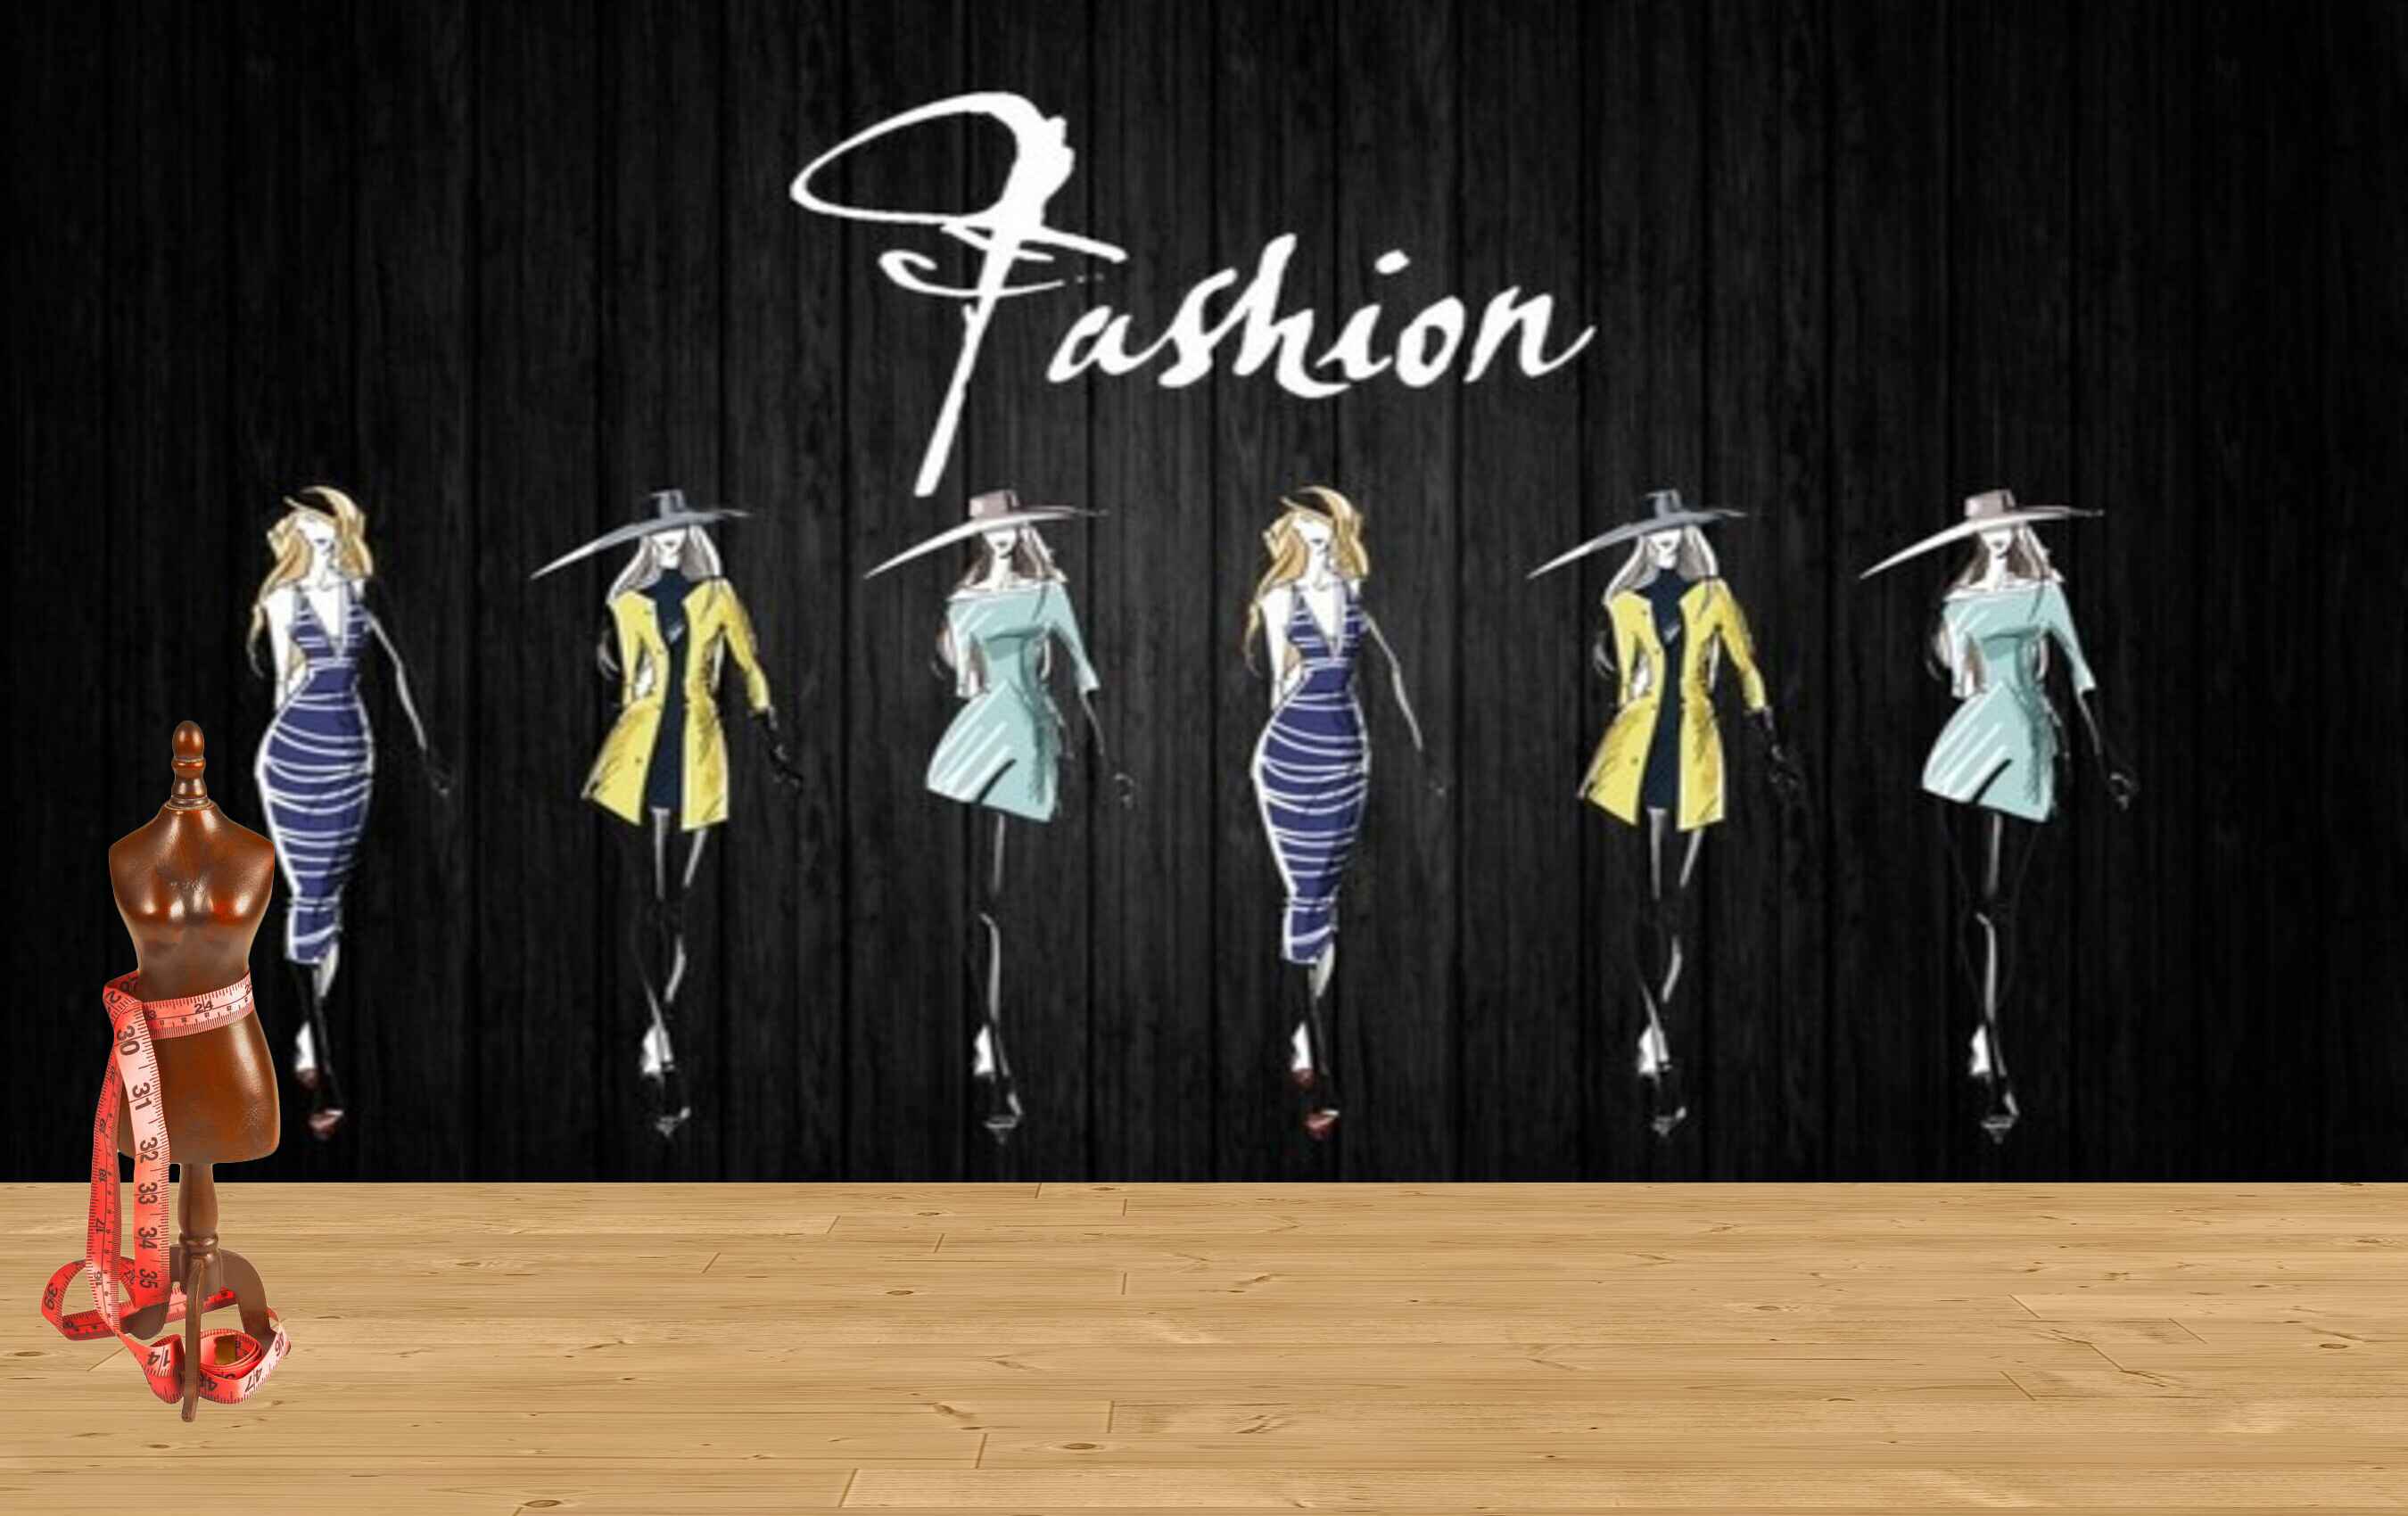 Avikalp MWZ3561 Fashion Girls Clothes HD Wallpaper for Fashion Boutique